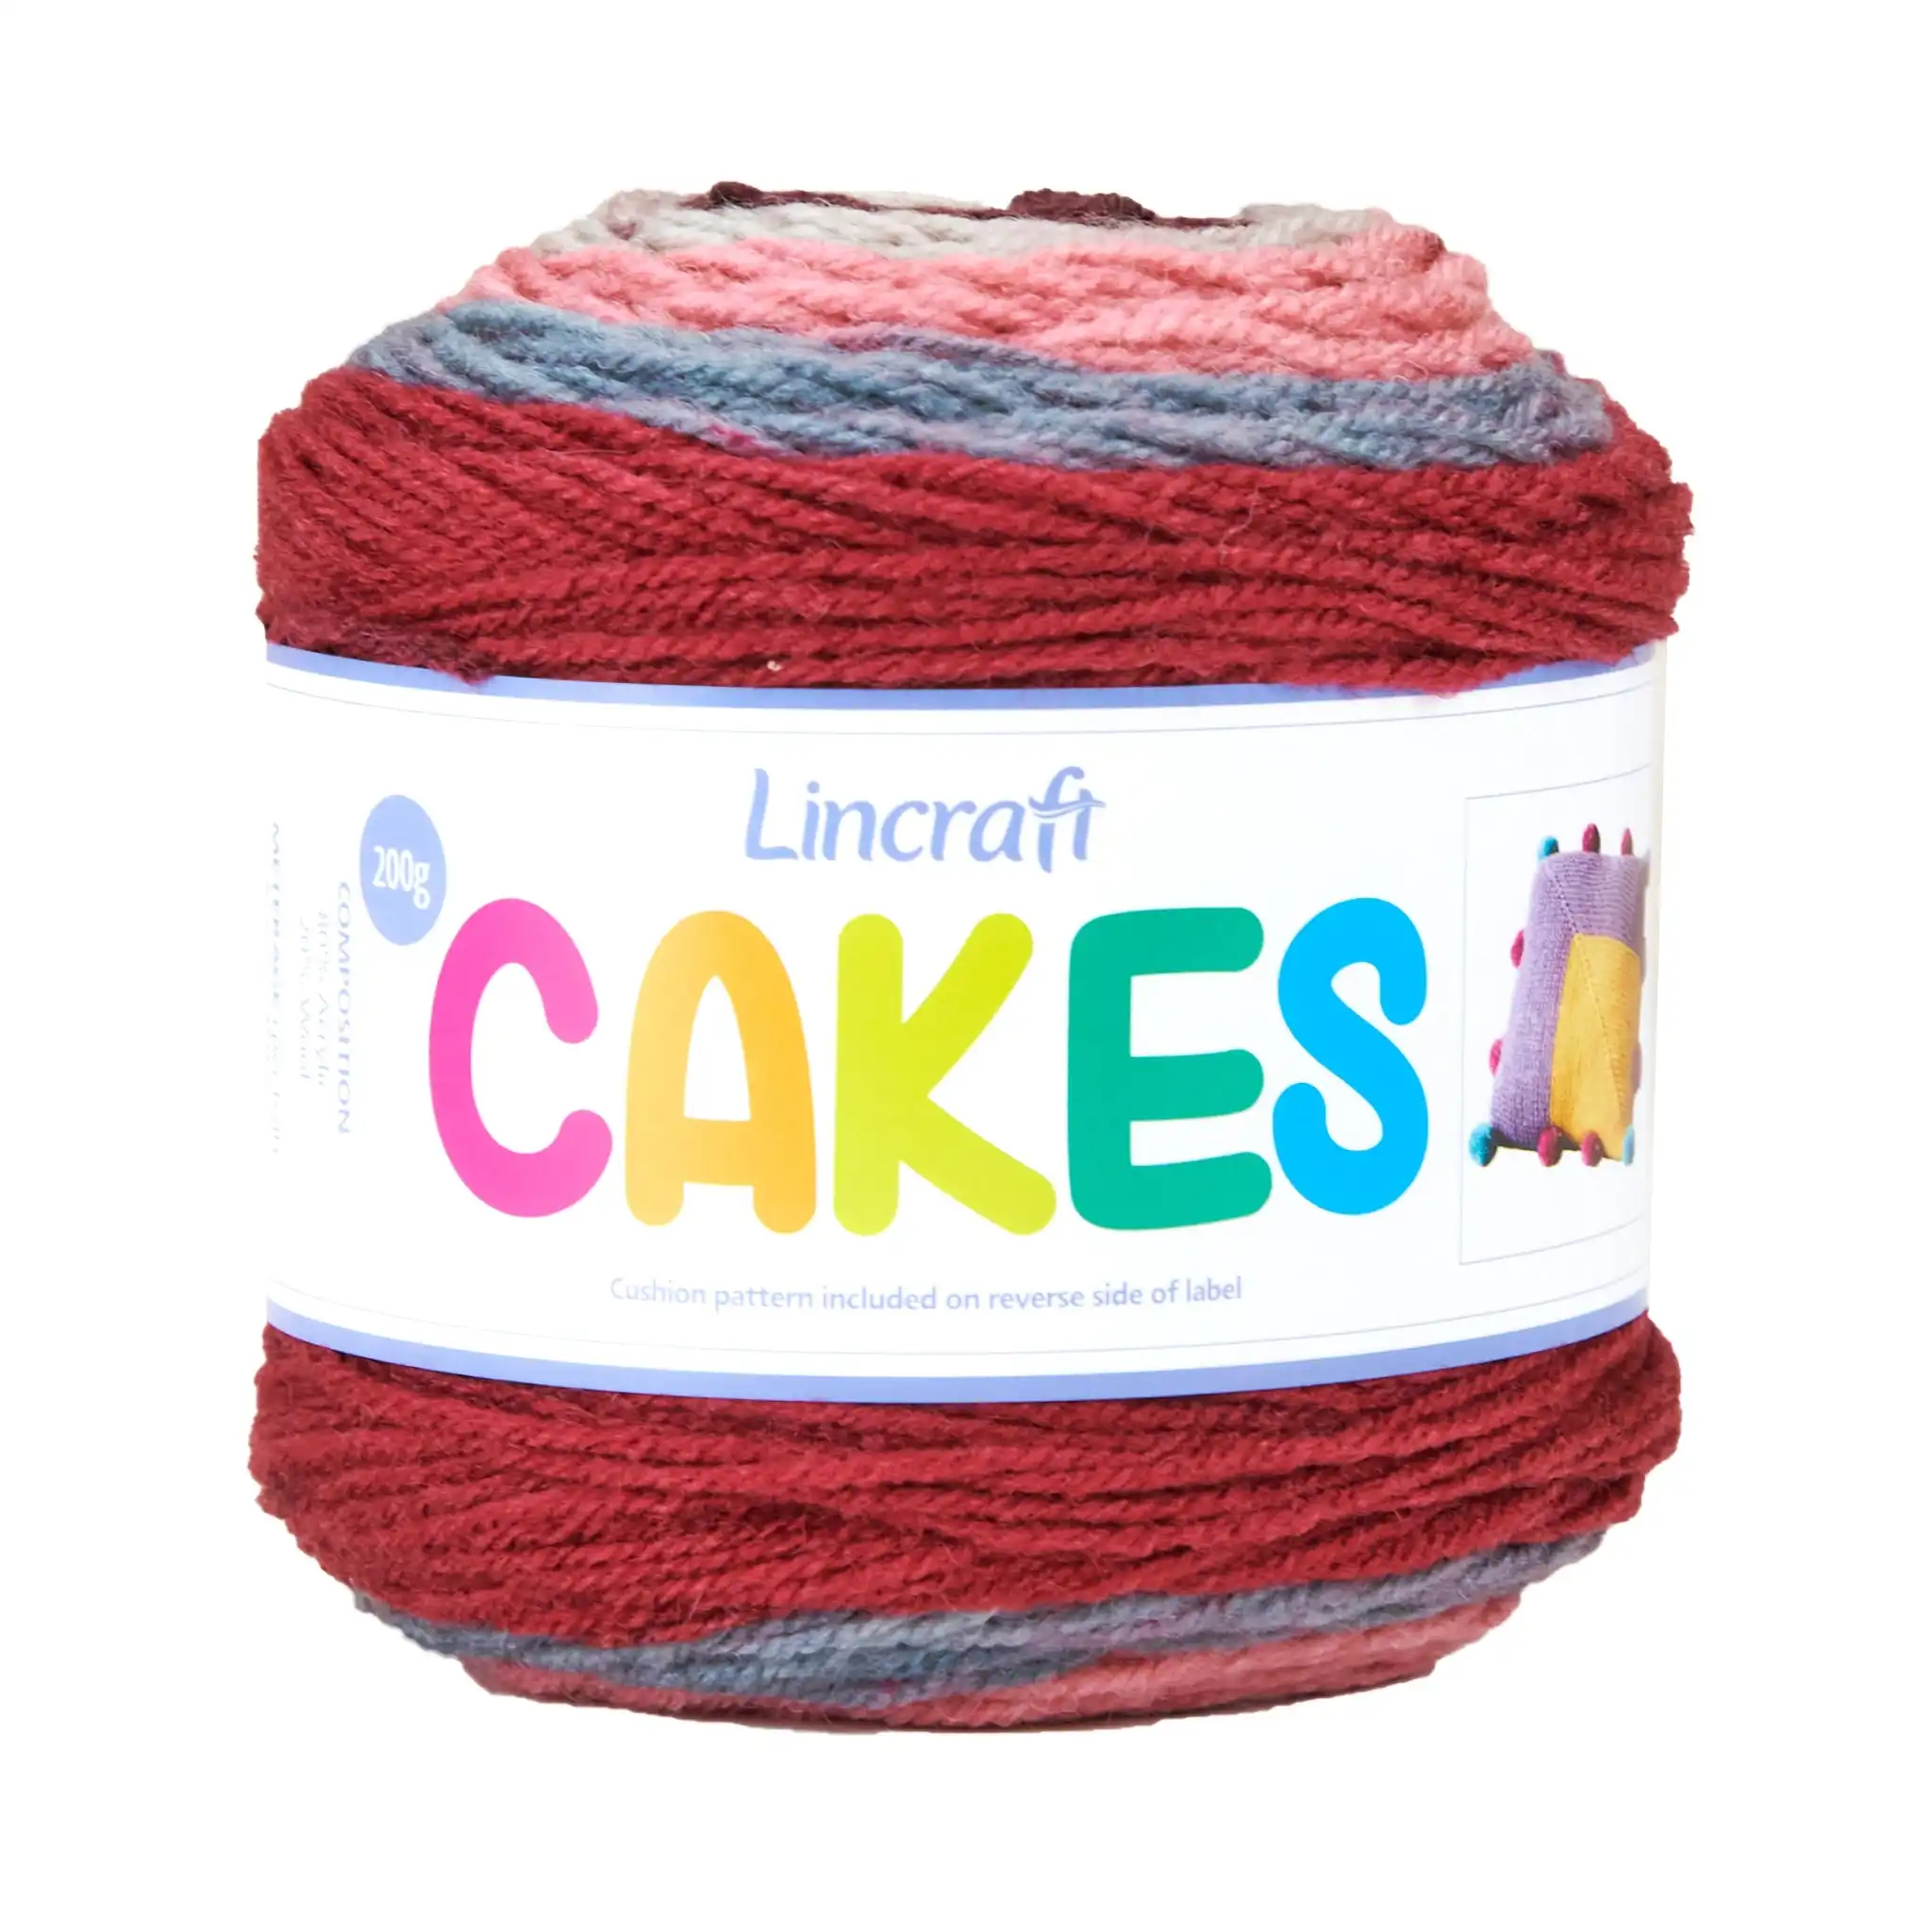 Lincraft Cakes Crochet & Knitting Yarn, Multi Pink/Grey- 200g